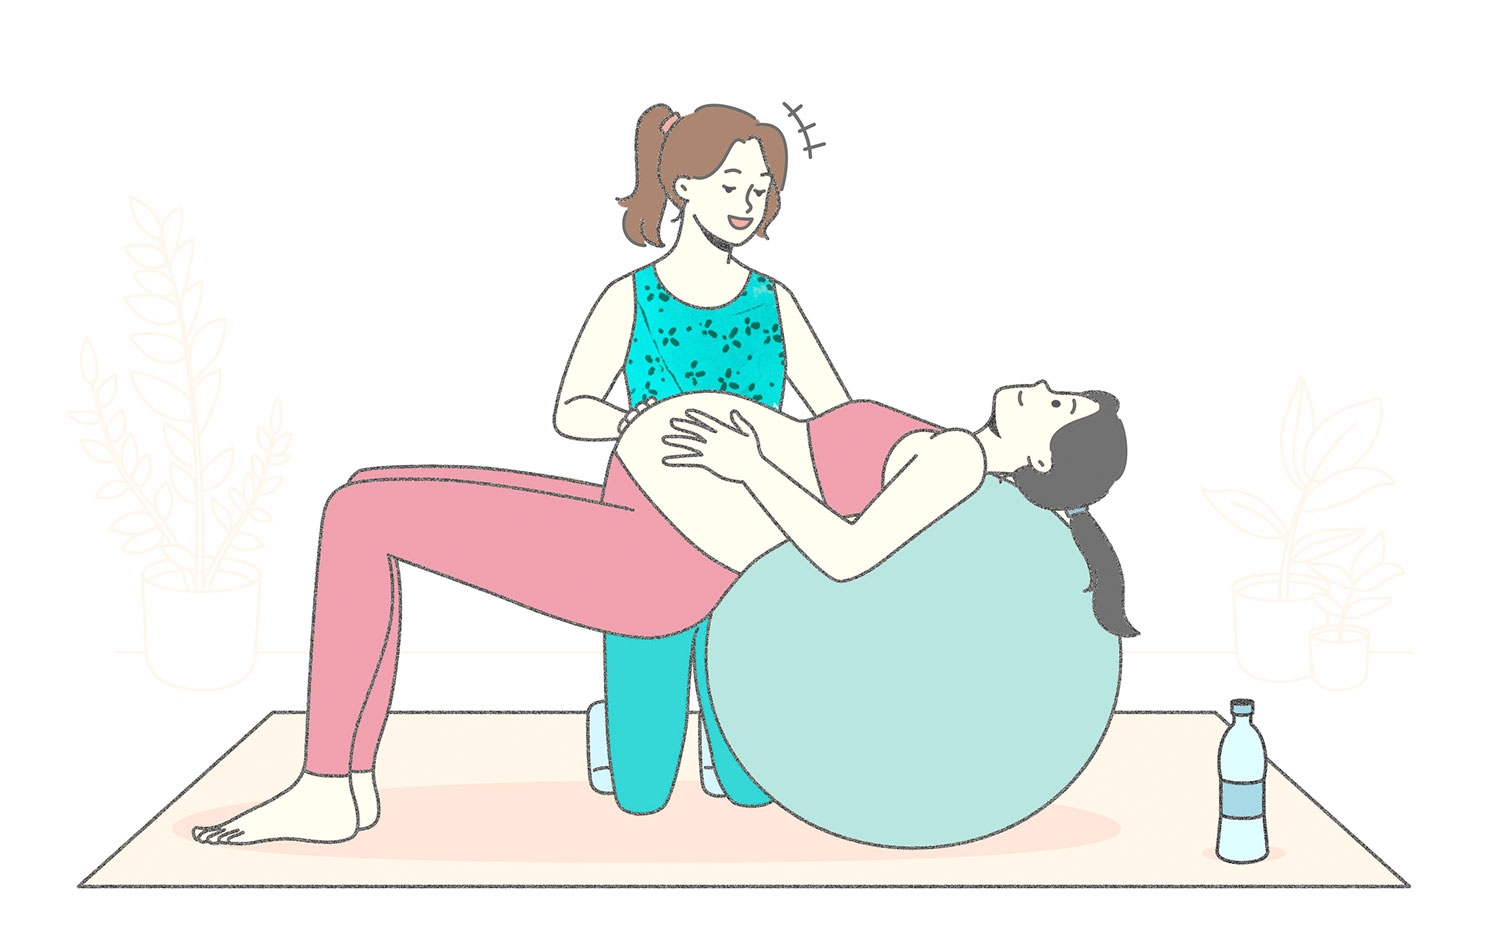 El embarazo: buen momento para ejercitarse